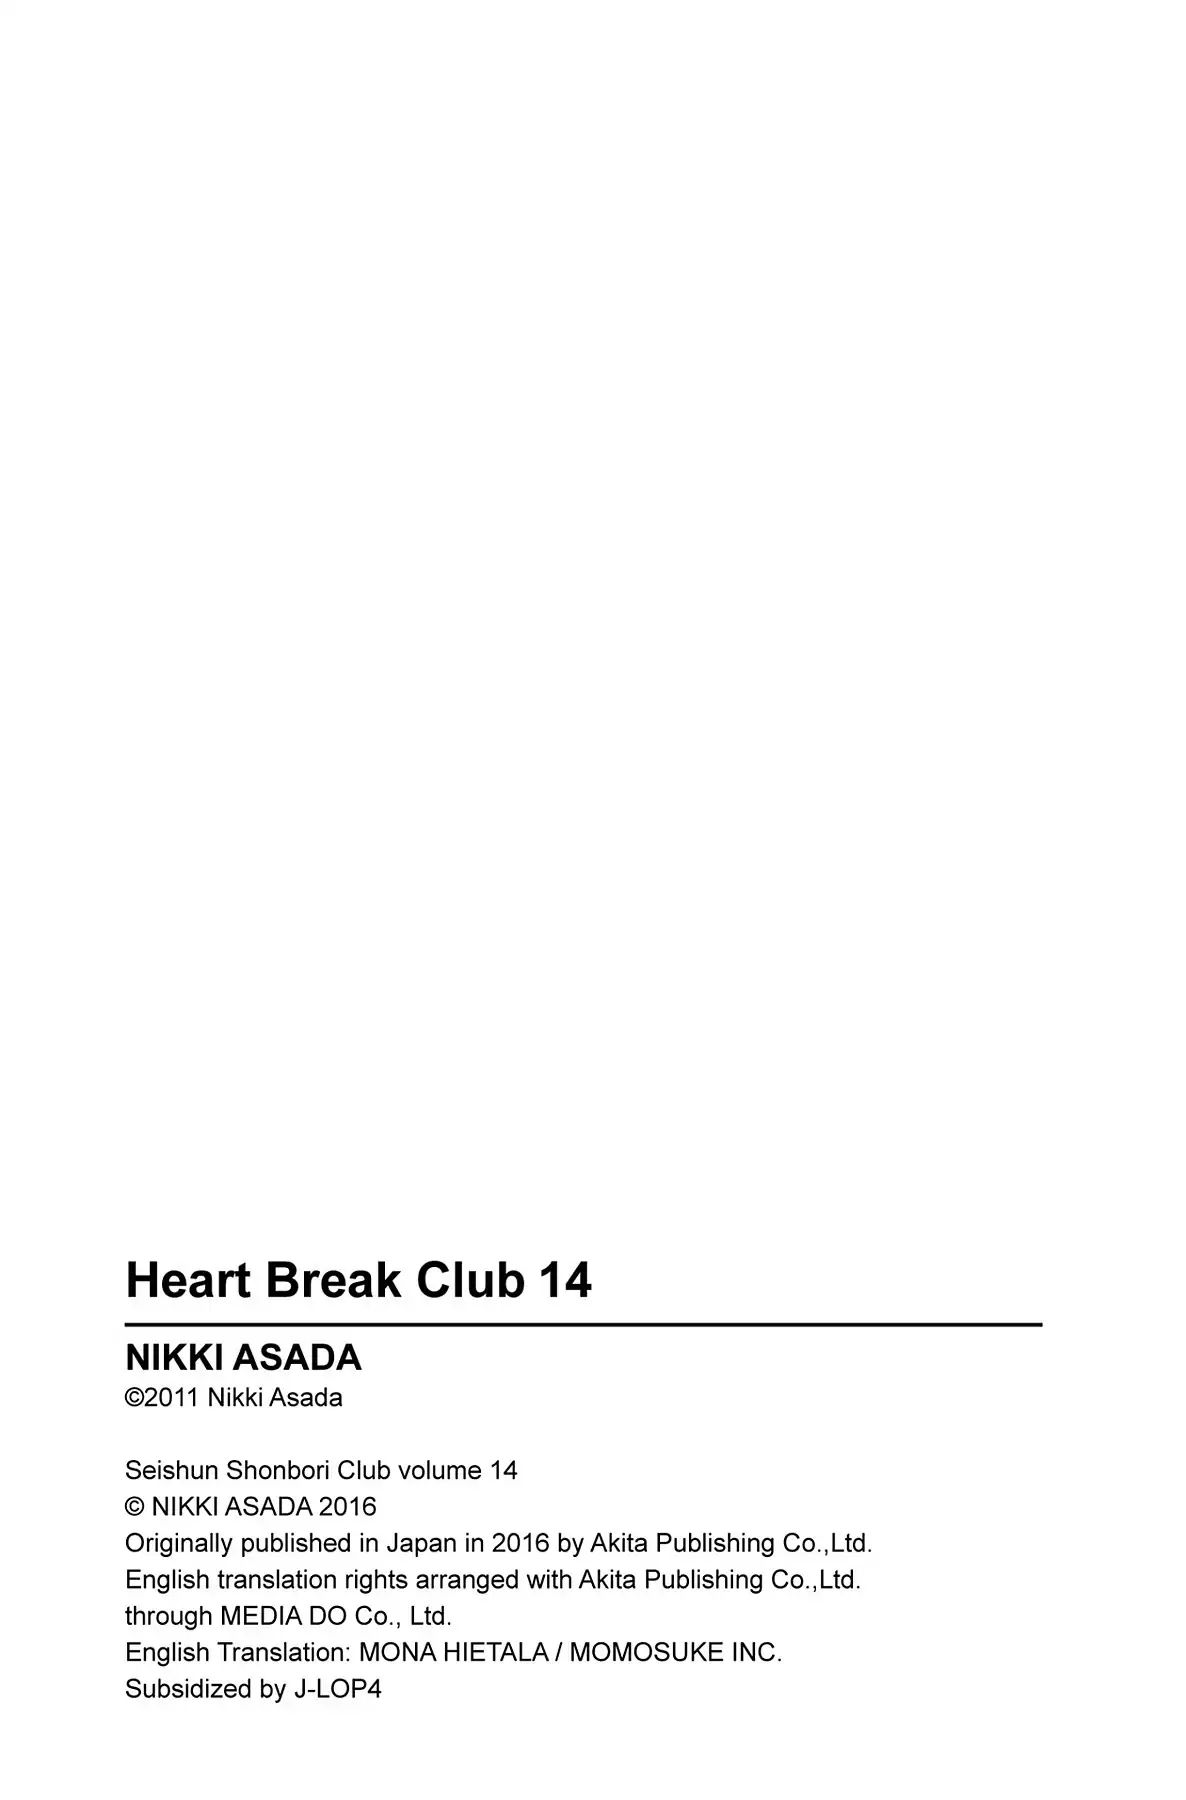 Heart Break Club Vol.14 68th STEP